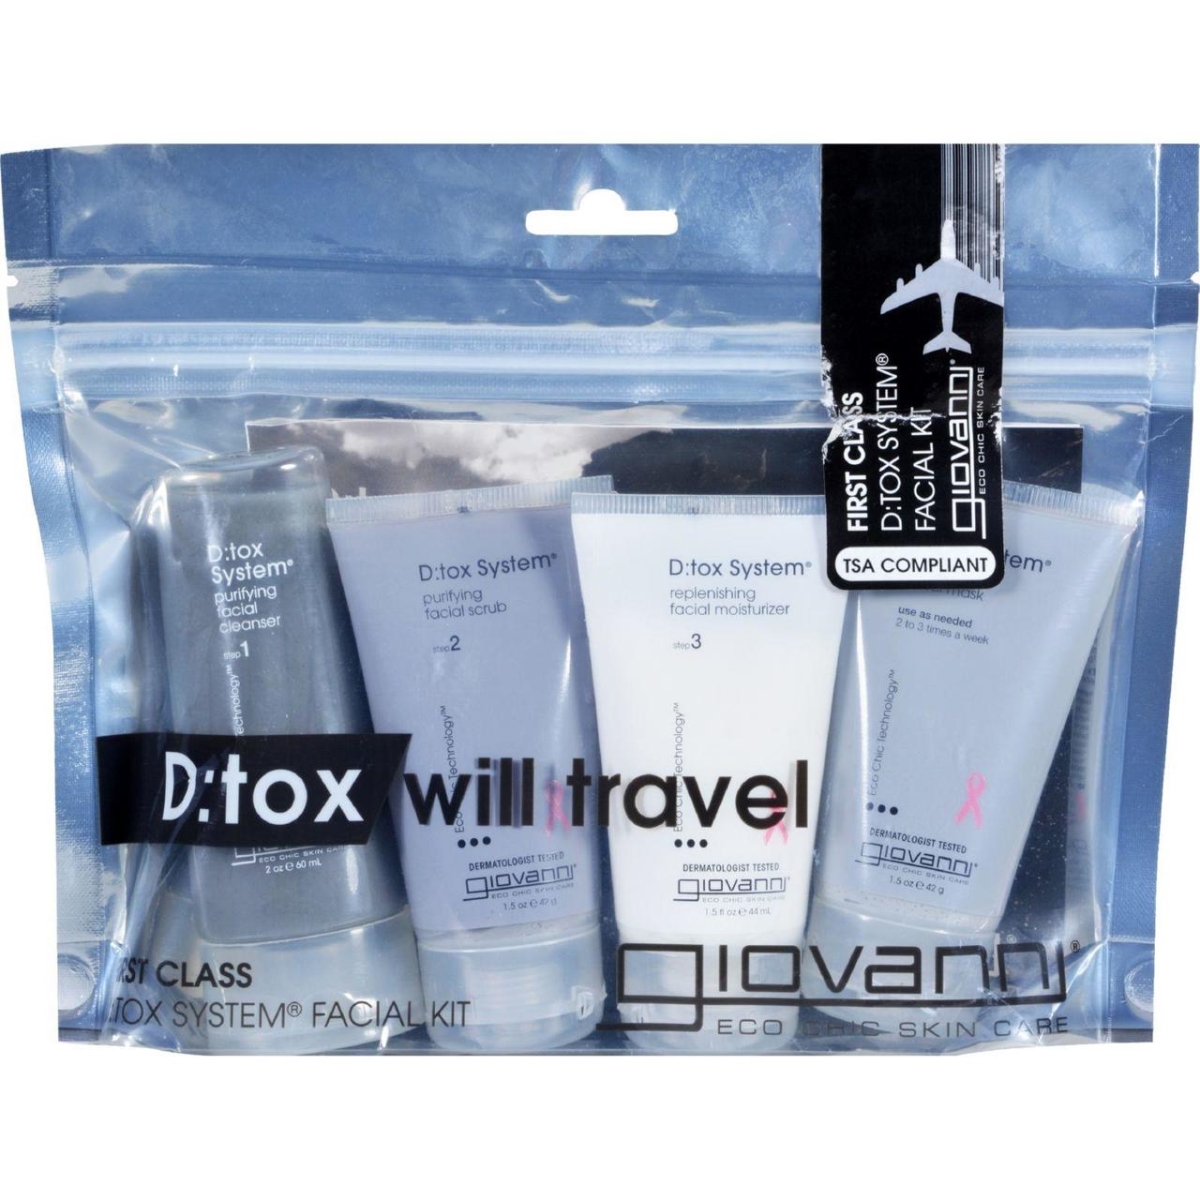 Hg1109982 Detox System Travel Kit